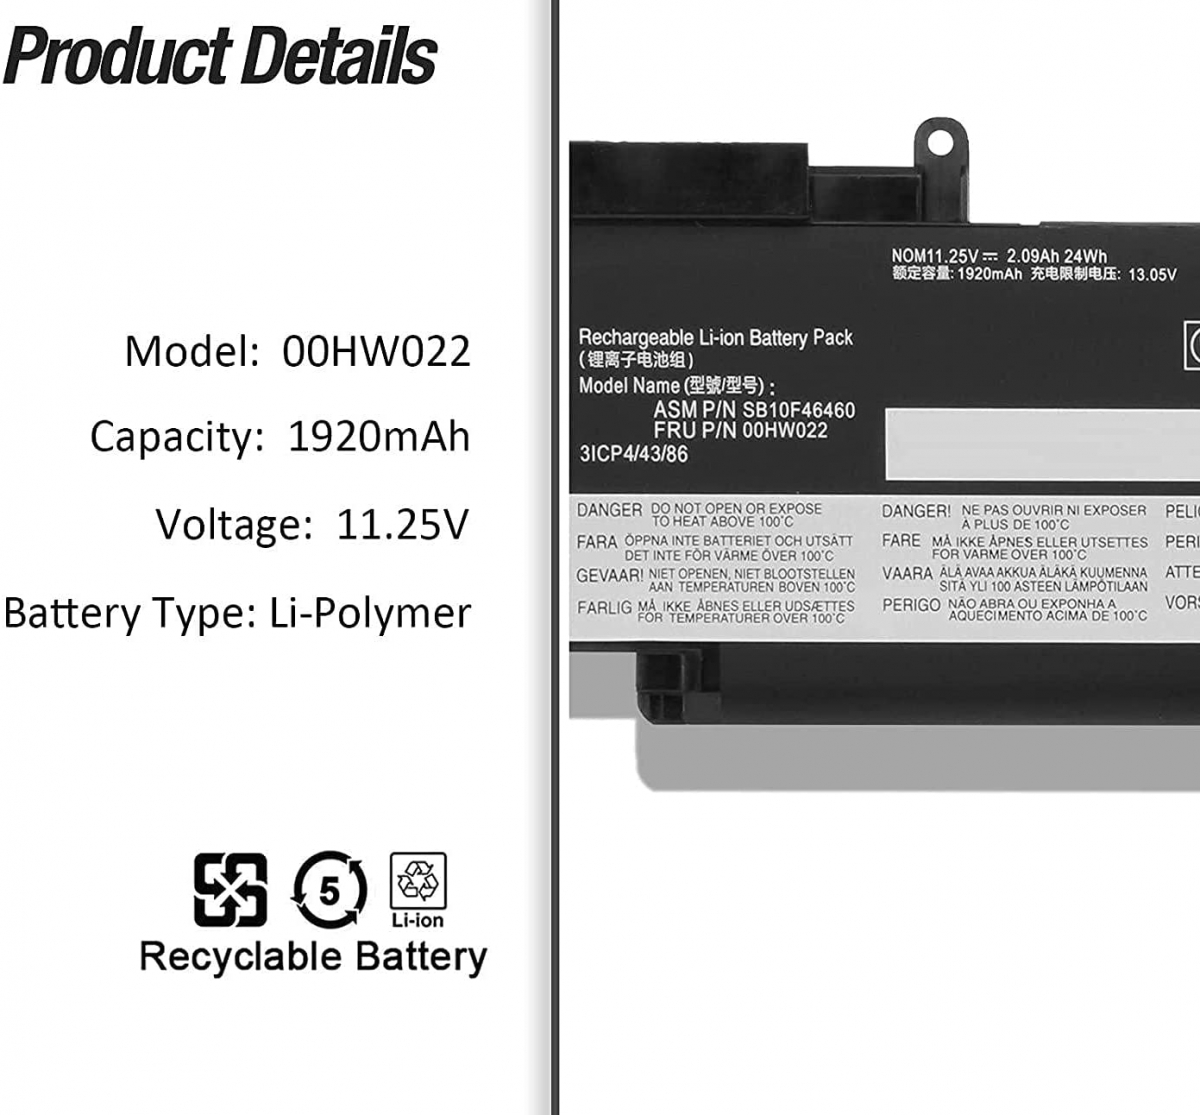 T460s Battery-CPY,Նոթբուքի մարտկոց,Նոթբուքի ադապտեր,Նոթբուքի լիցքավորիչ, Dell մարտկոց, Apple մարտկոց, HP մարտկոց